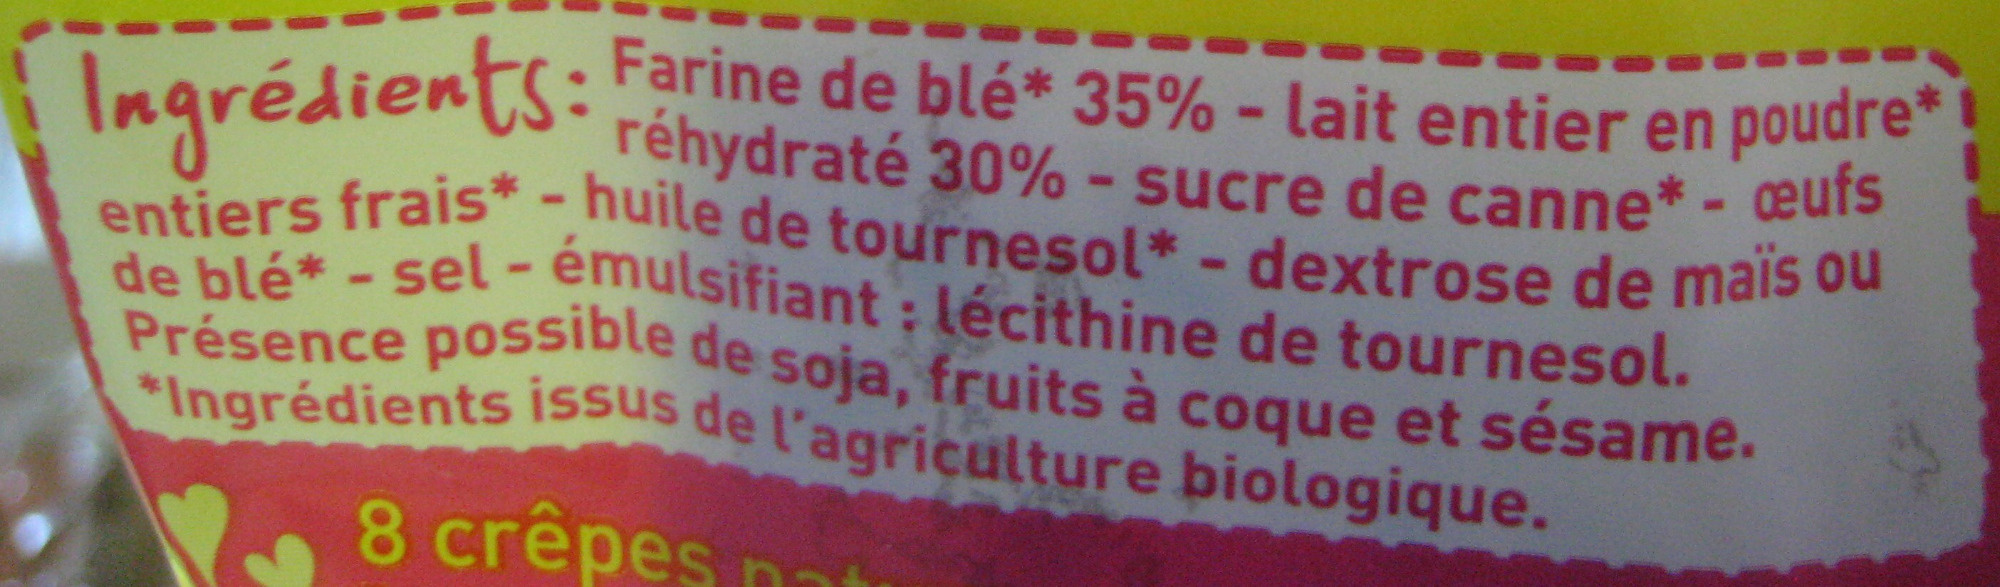 8 Crêpes nature Bio Monoprix - Ingredients - fr